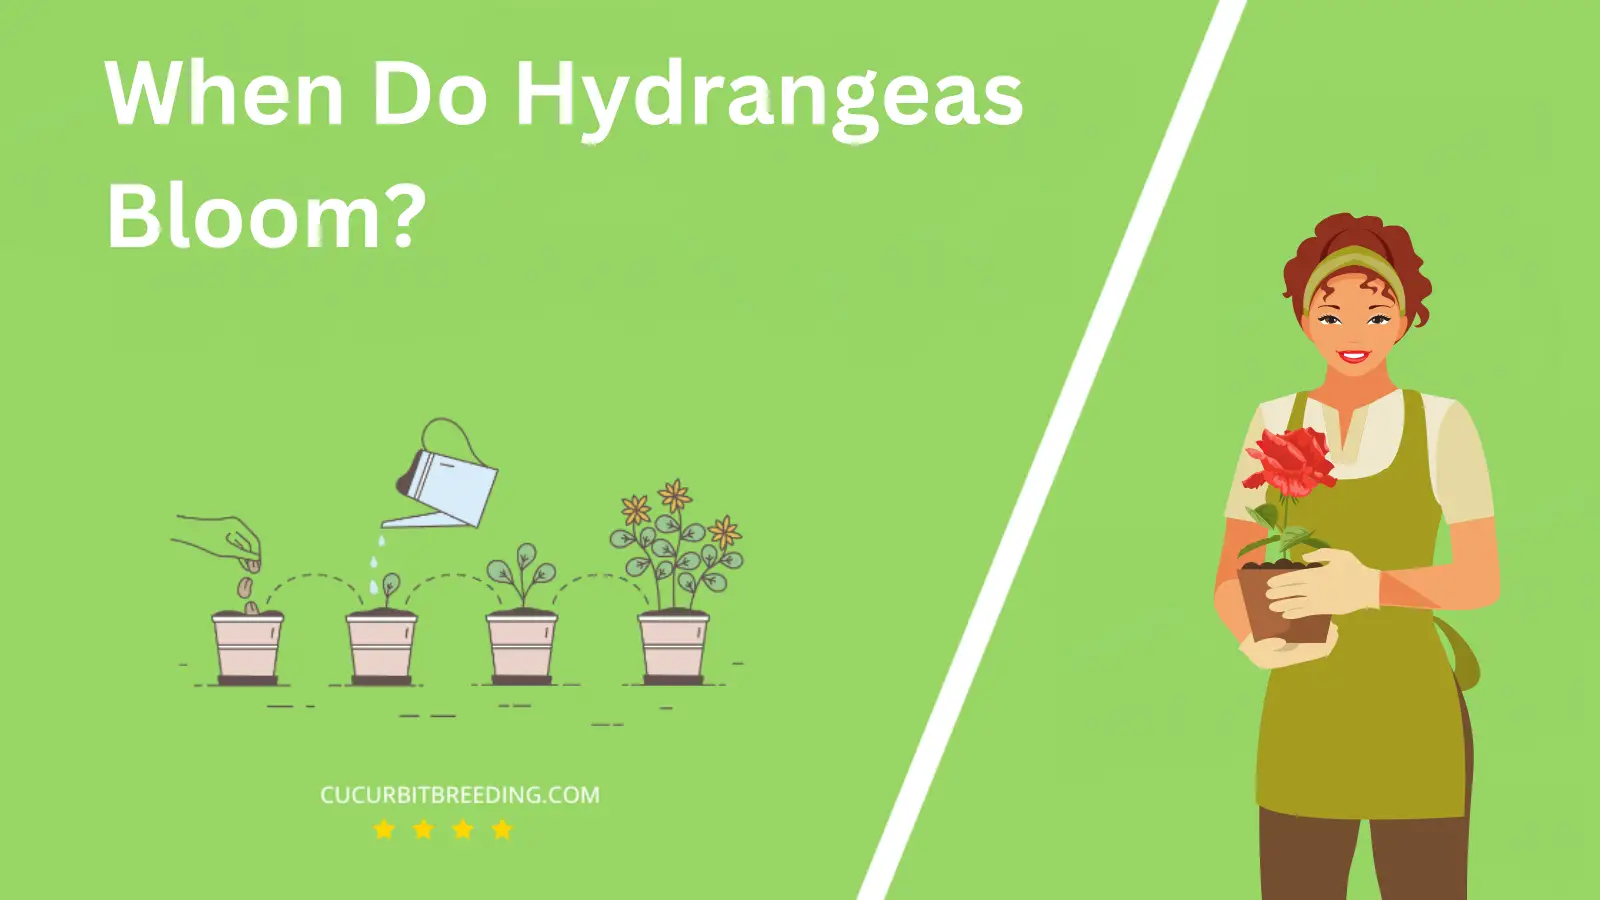 When Do Hydrangeas Bloom?